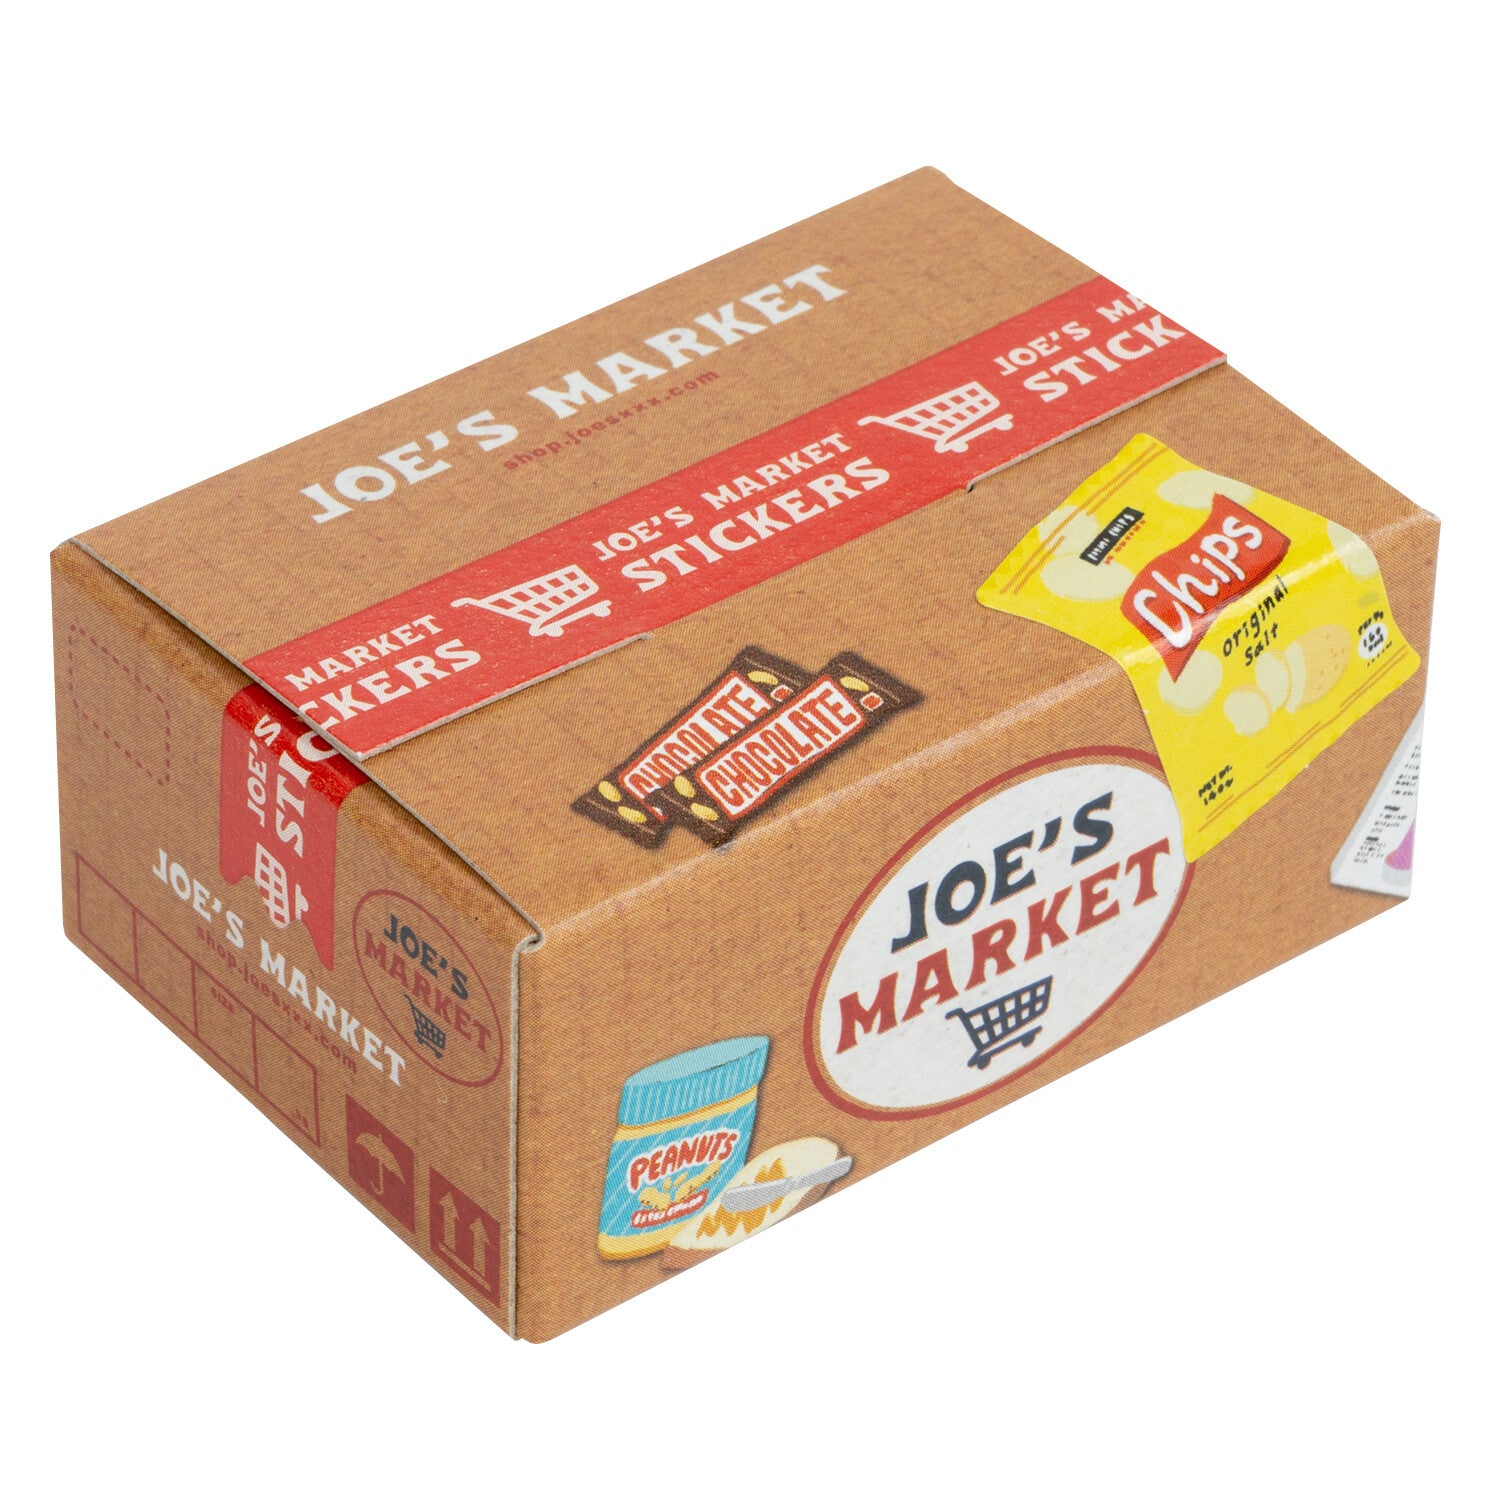 Joe's Market Box Sticker Flakes